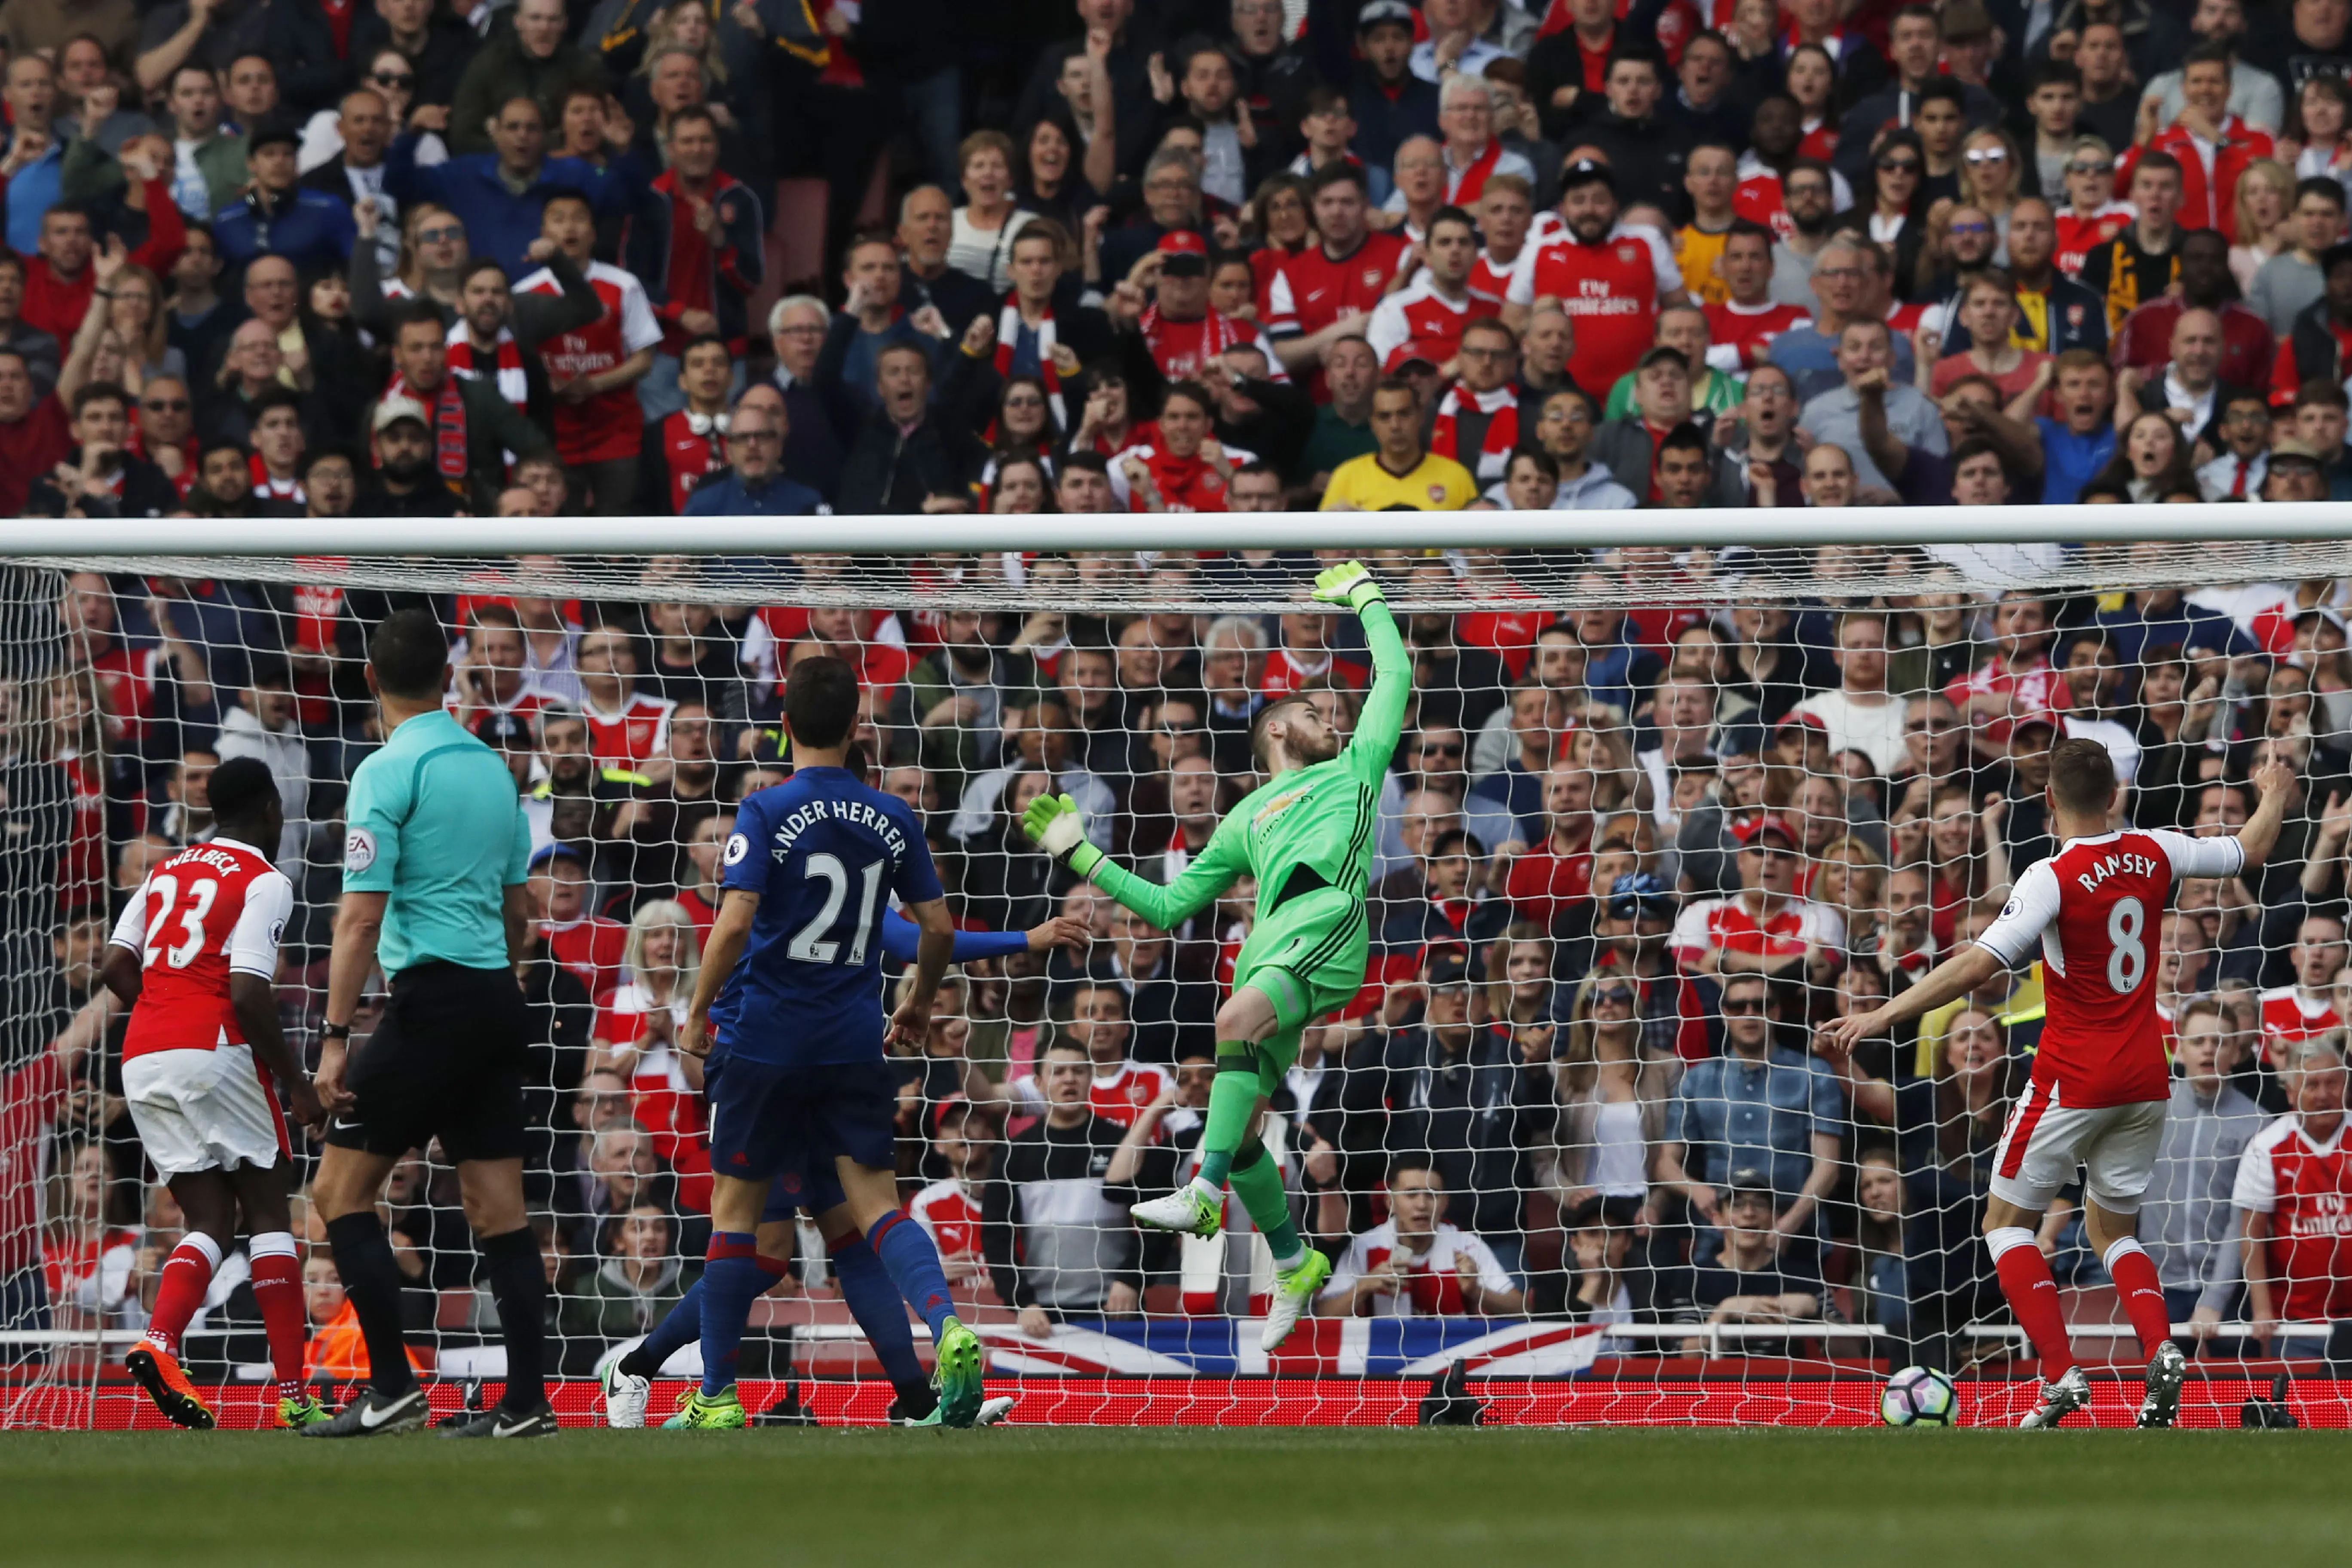 Momen terjadinya gol sundulan penyerang Arsenal, Danny Welbeck ke gawang Manchester United (MU) kawalan David De Gea. (Adrian DENNIS / AFP)